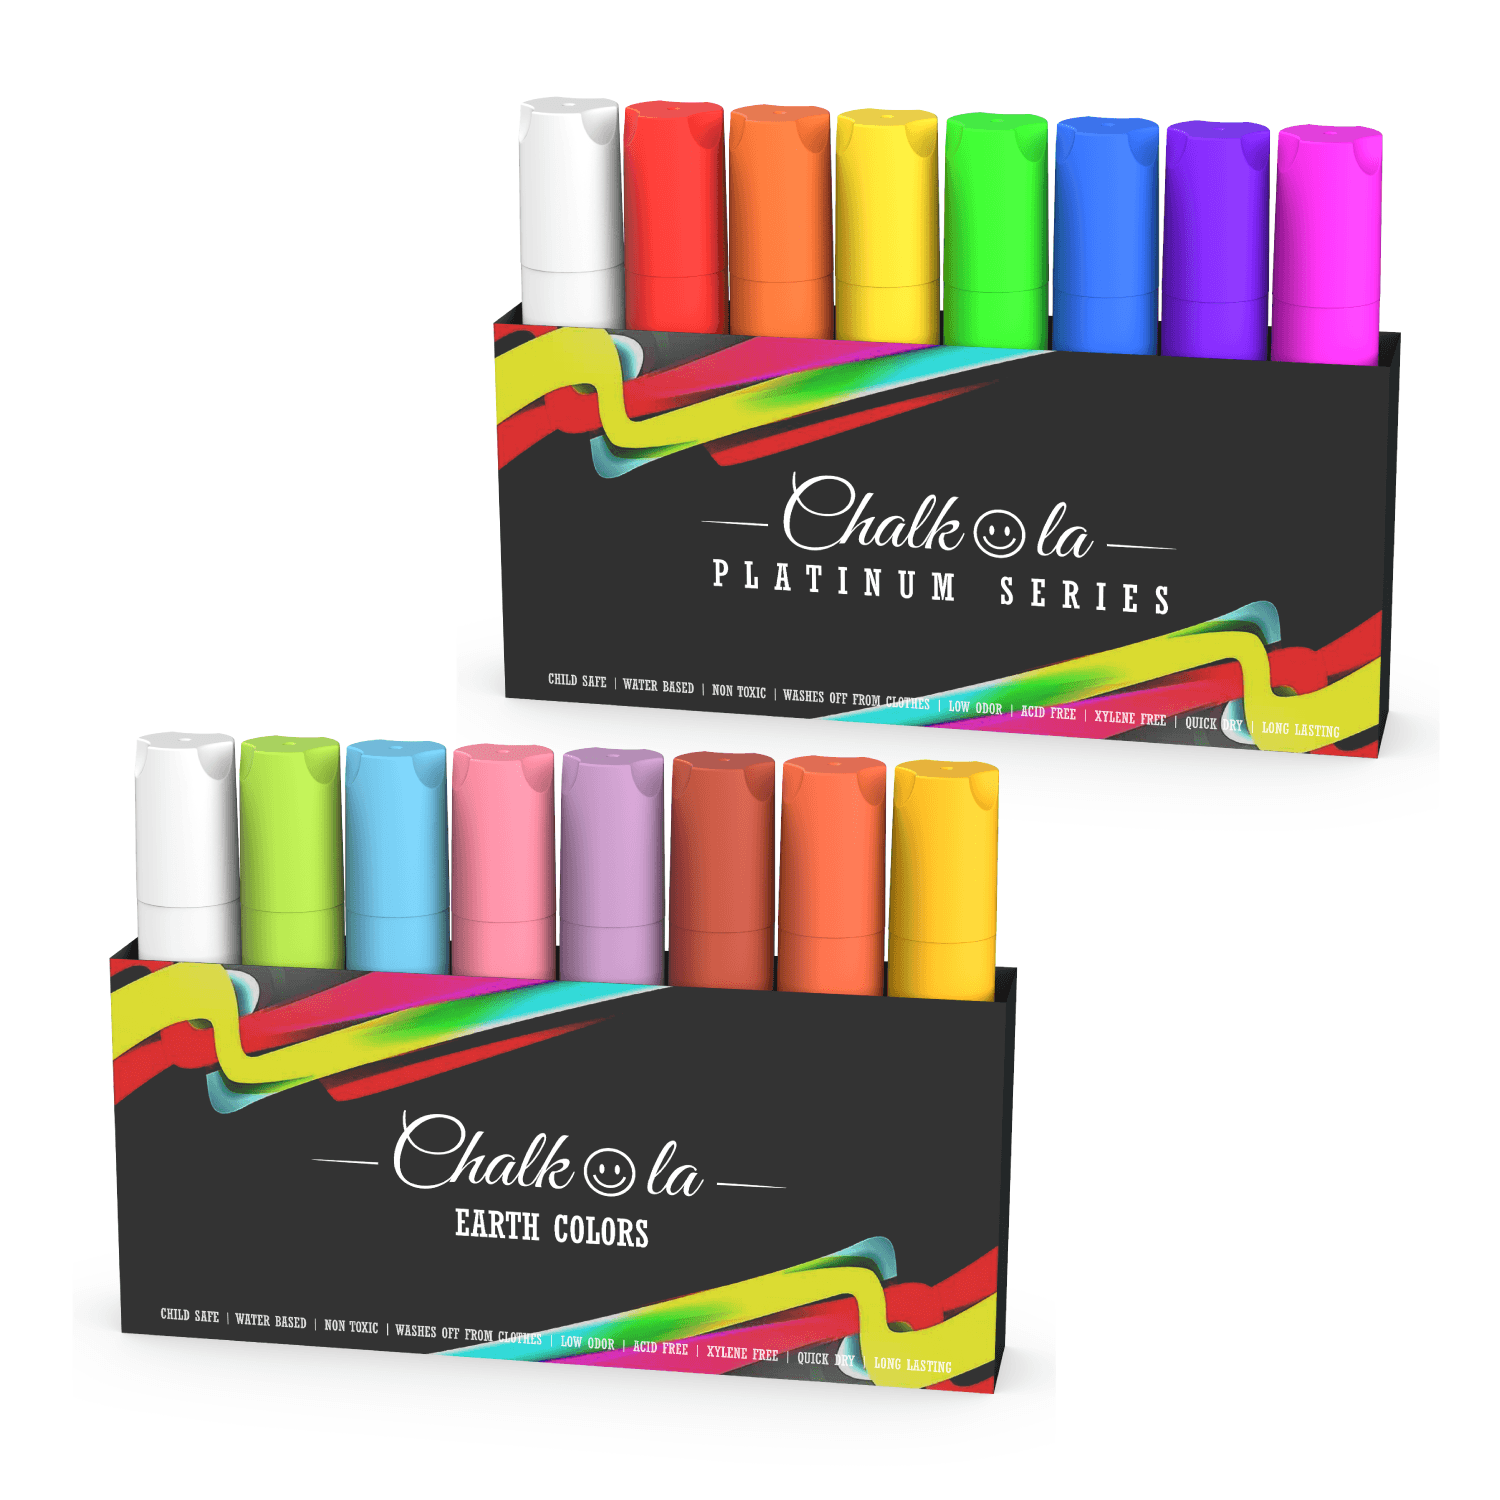 Jumbo Nib Classic Earth Color Chalk Markers For Windows - Pack Of 8 -  Chalkola Art Supply